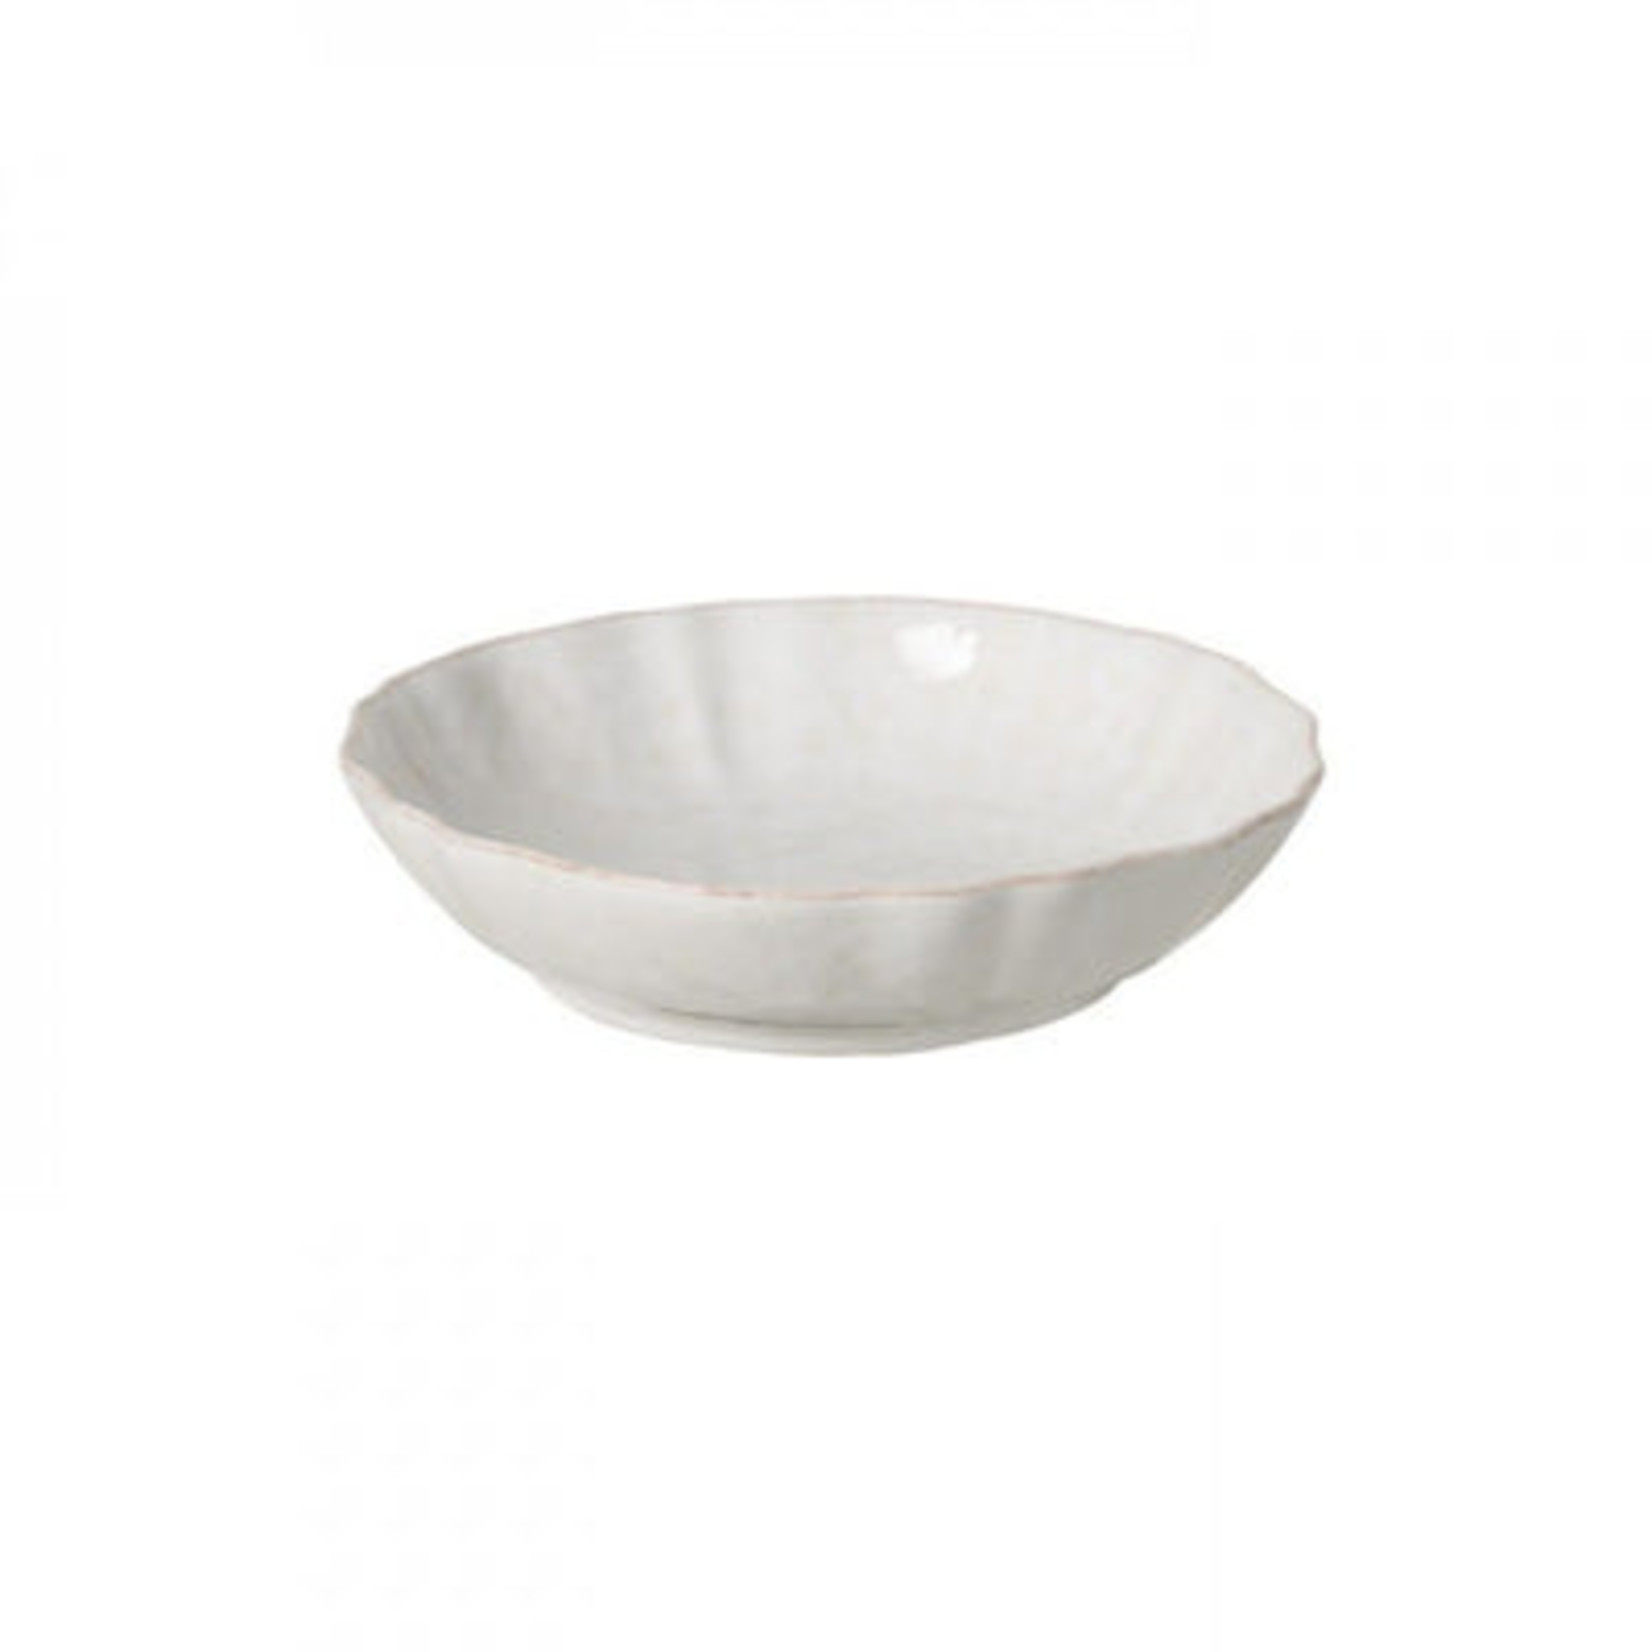 Casafina Impressions Individual Pasta Bowl, white